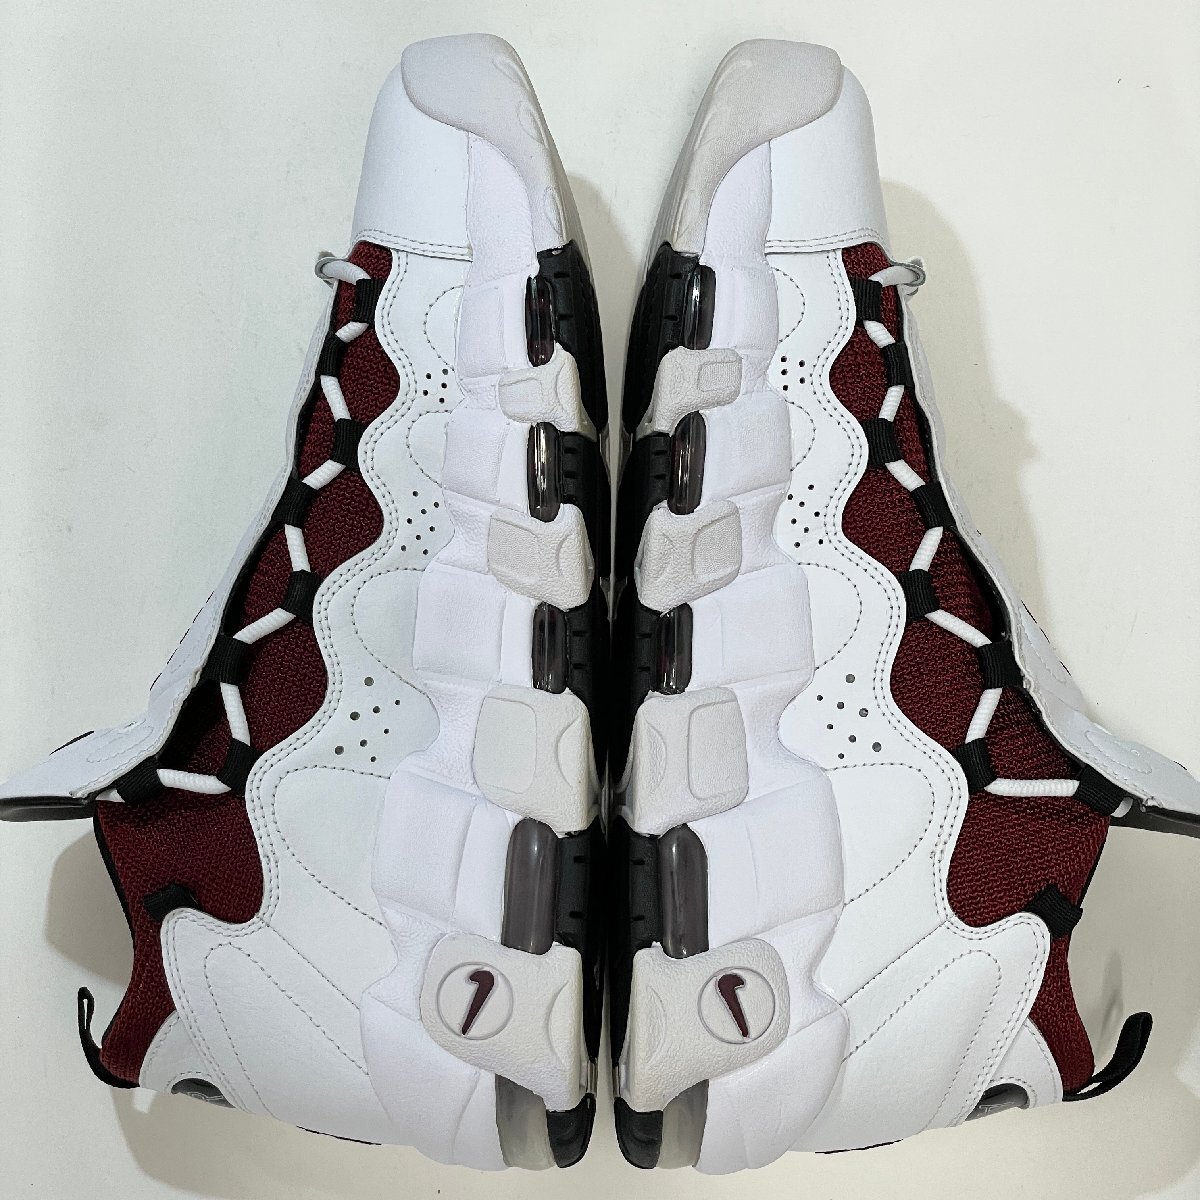 30cm NIKE AIR MORE MONEY AJ2998-100 Nike воздушный mo льняное семя - белый красный мужской спортивные туфли WH H106789